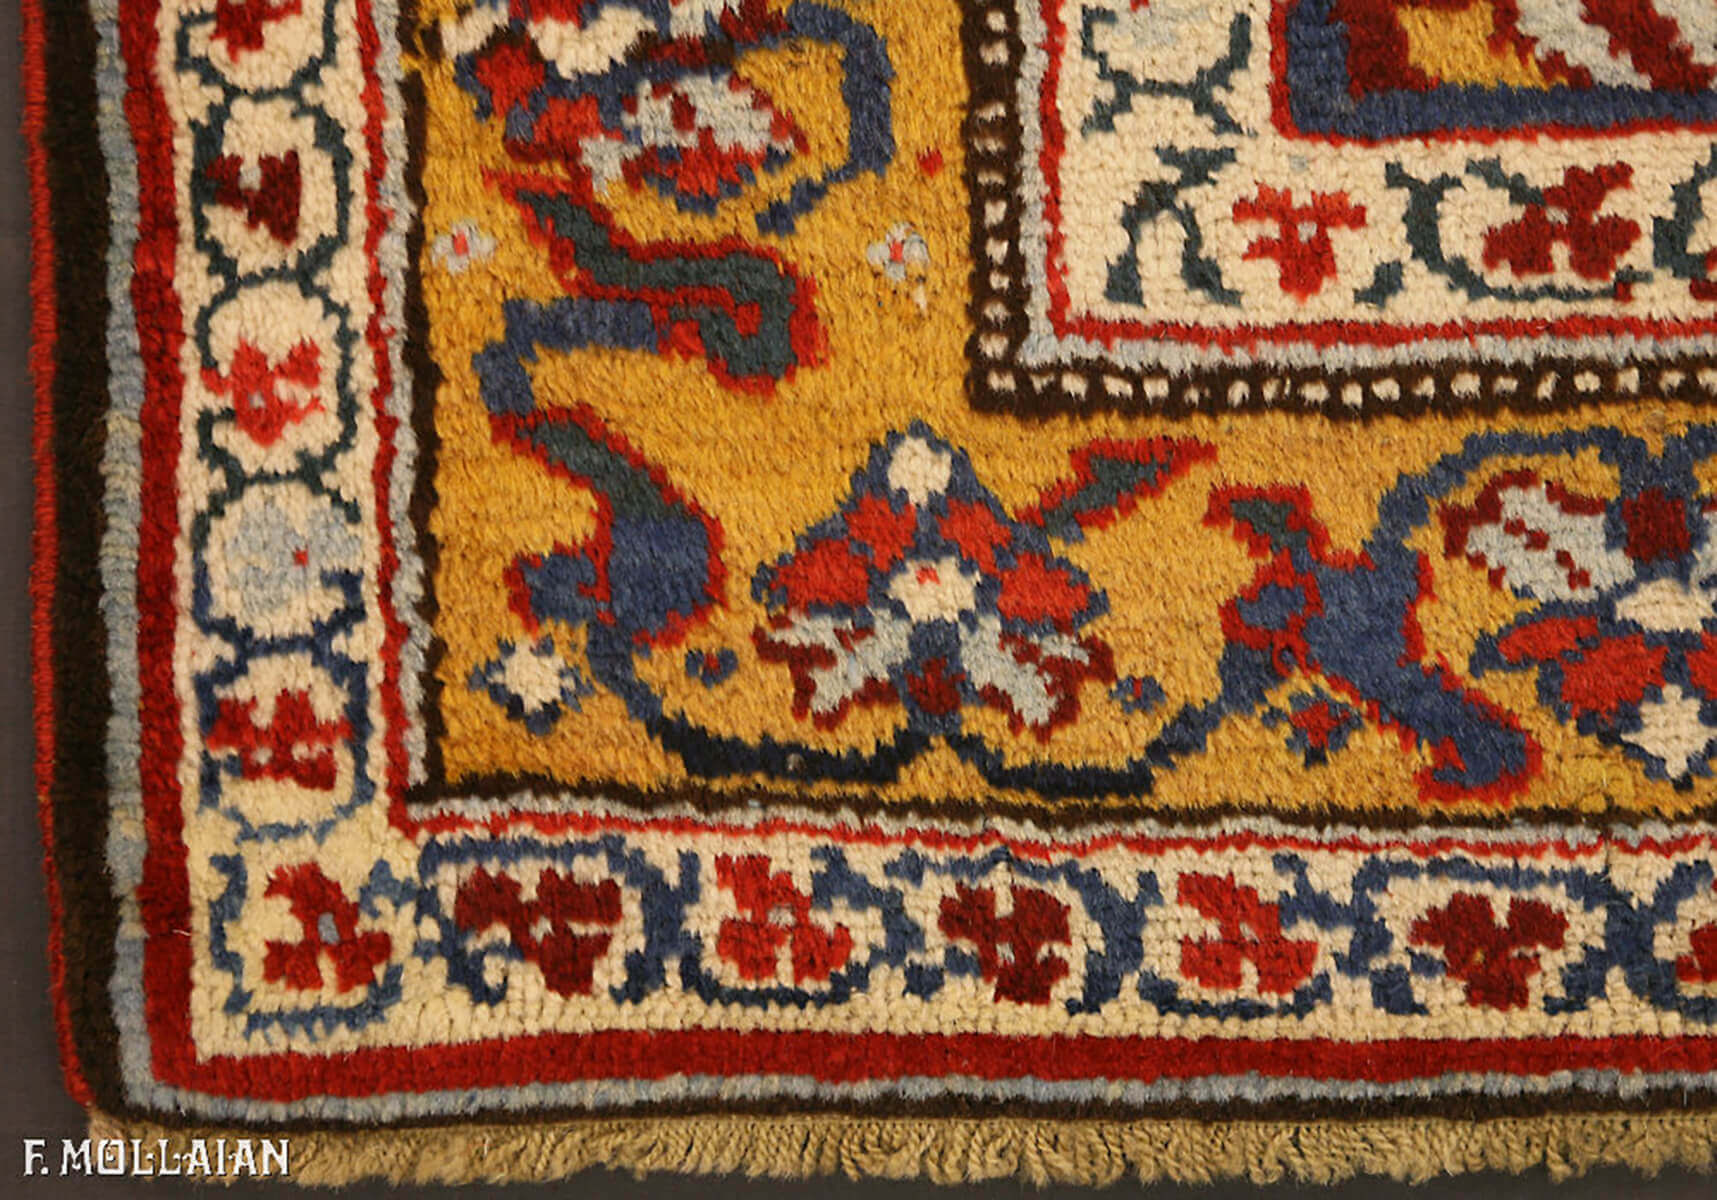 Antique North West Persia Rug n°:26698500